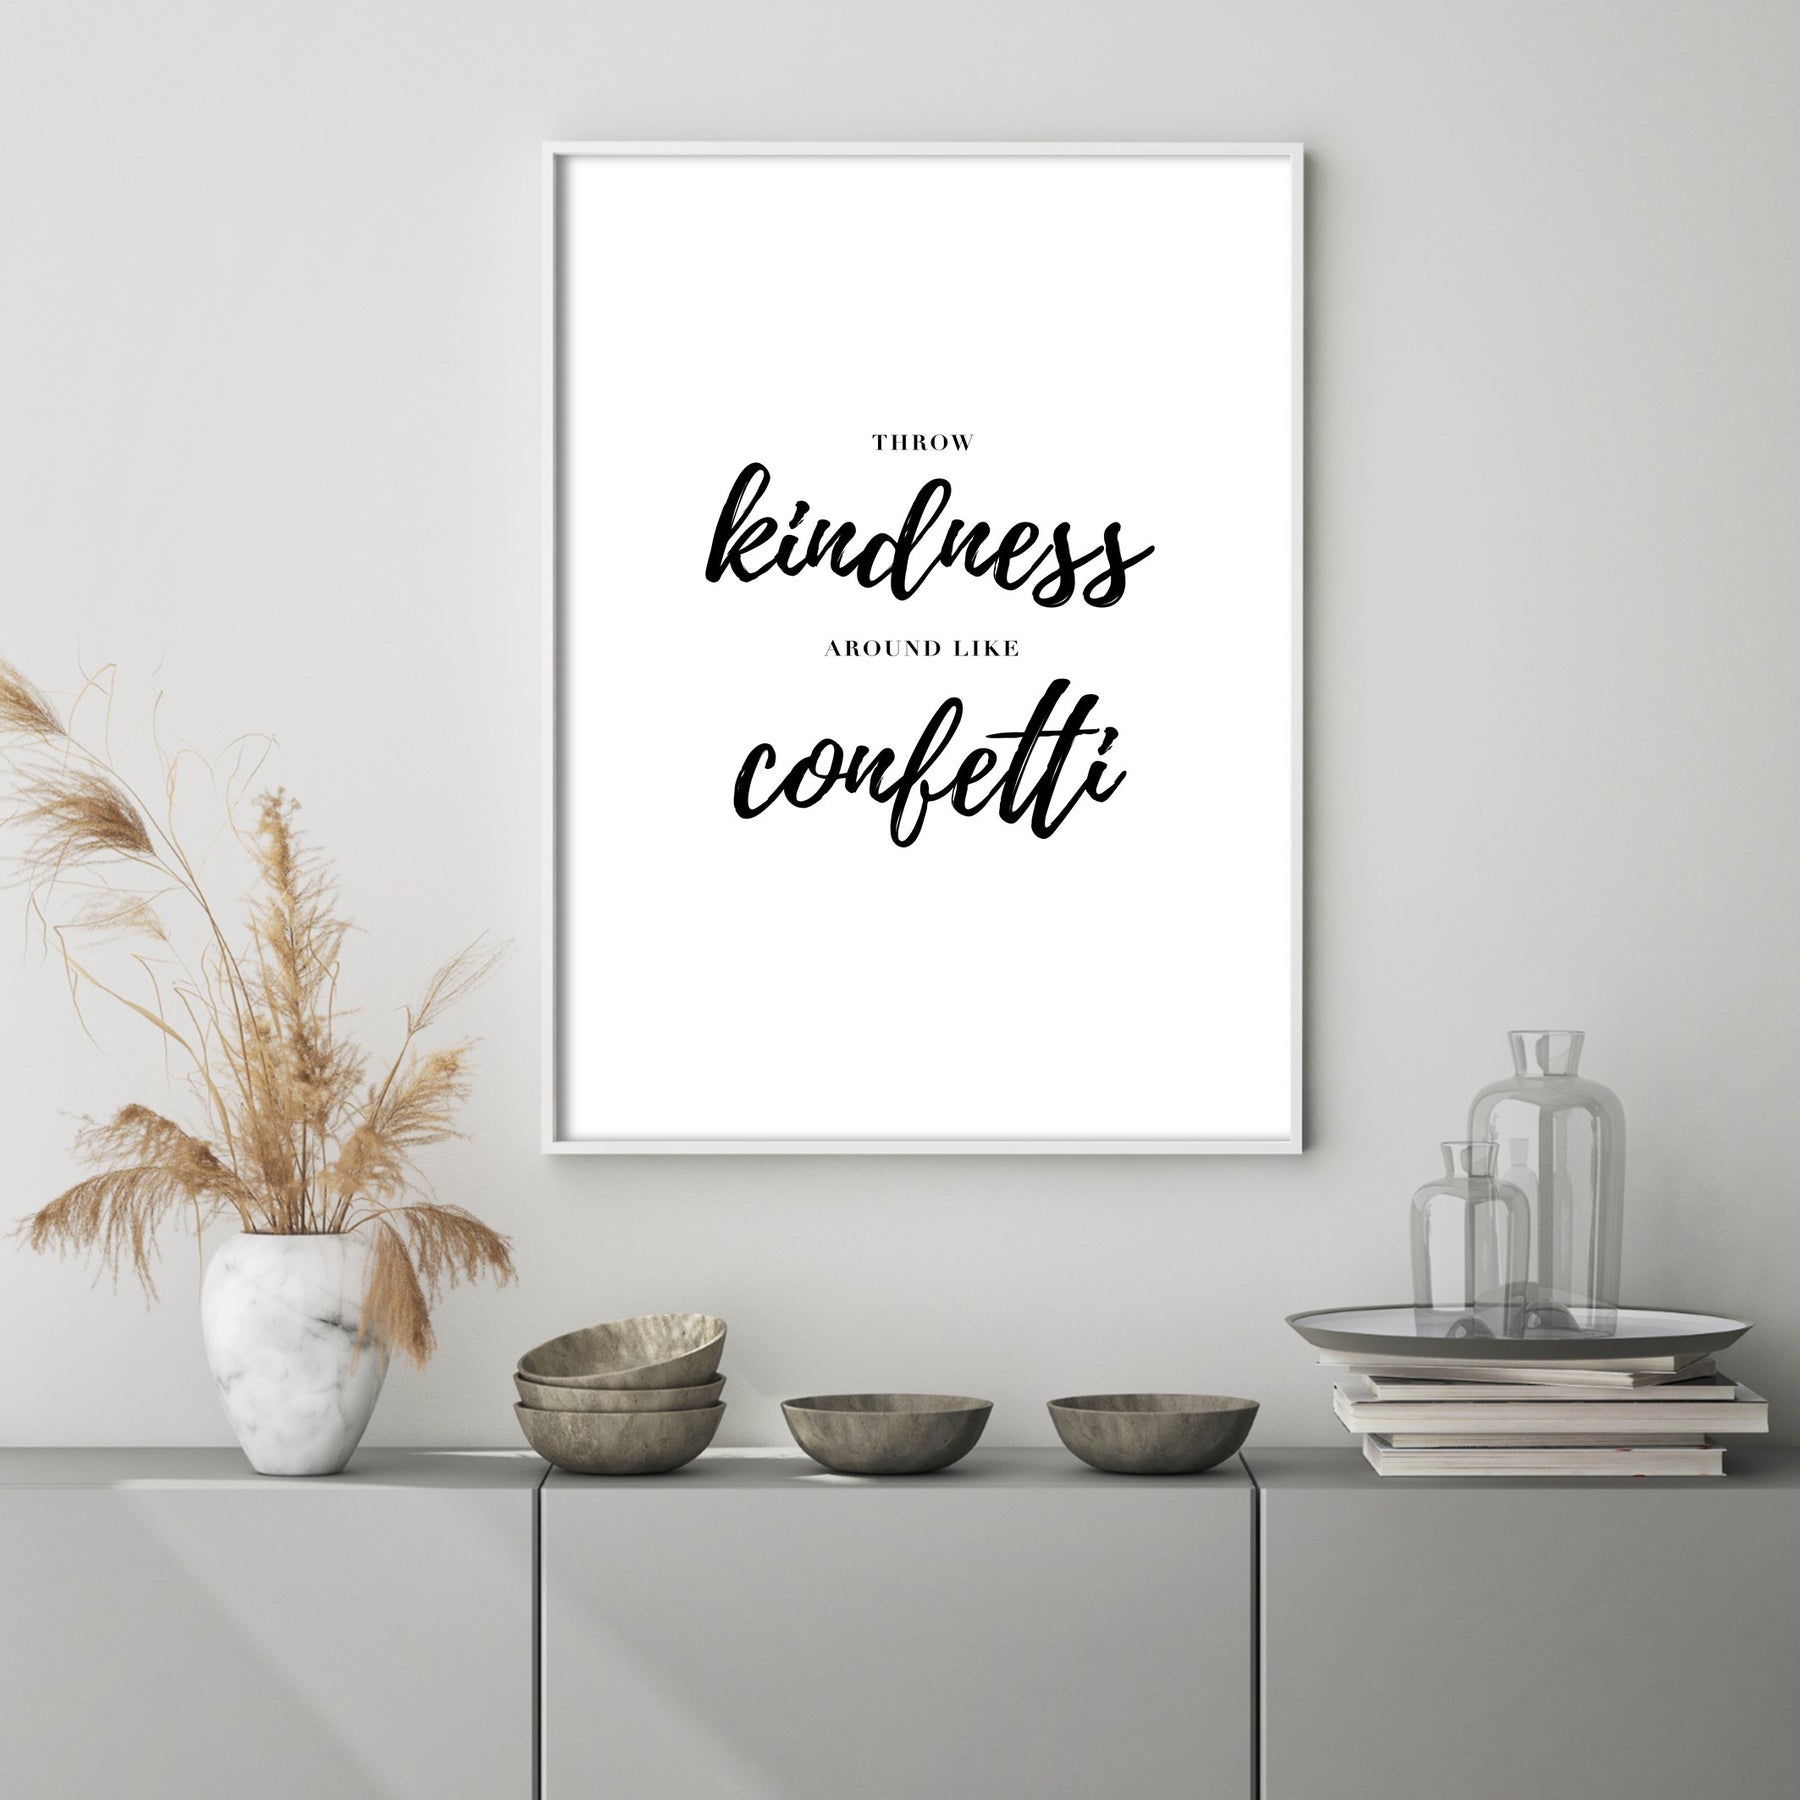 Like Typography Poster My – Slay Art Confetti Throw Print Wall | Kindness Around